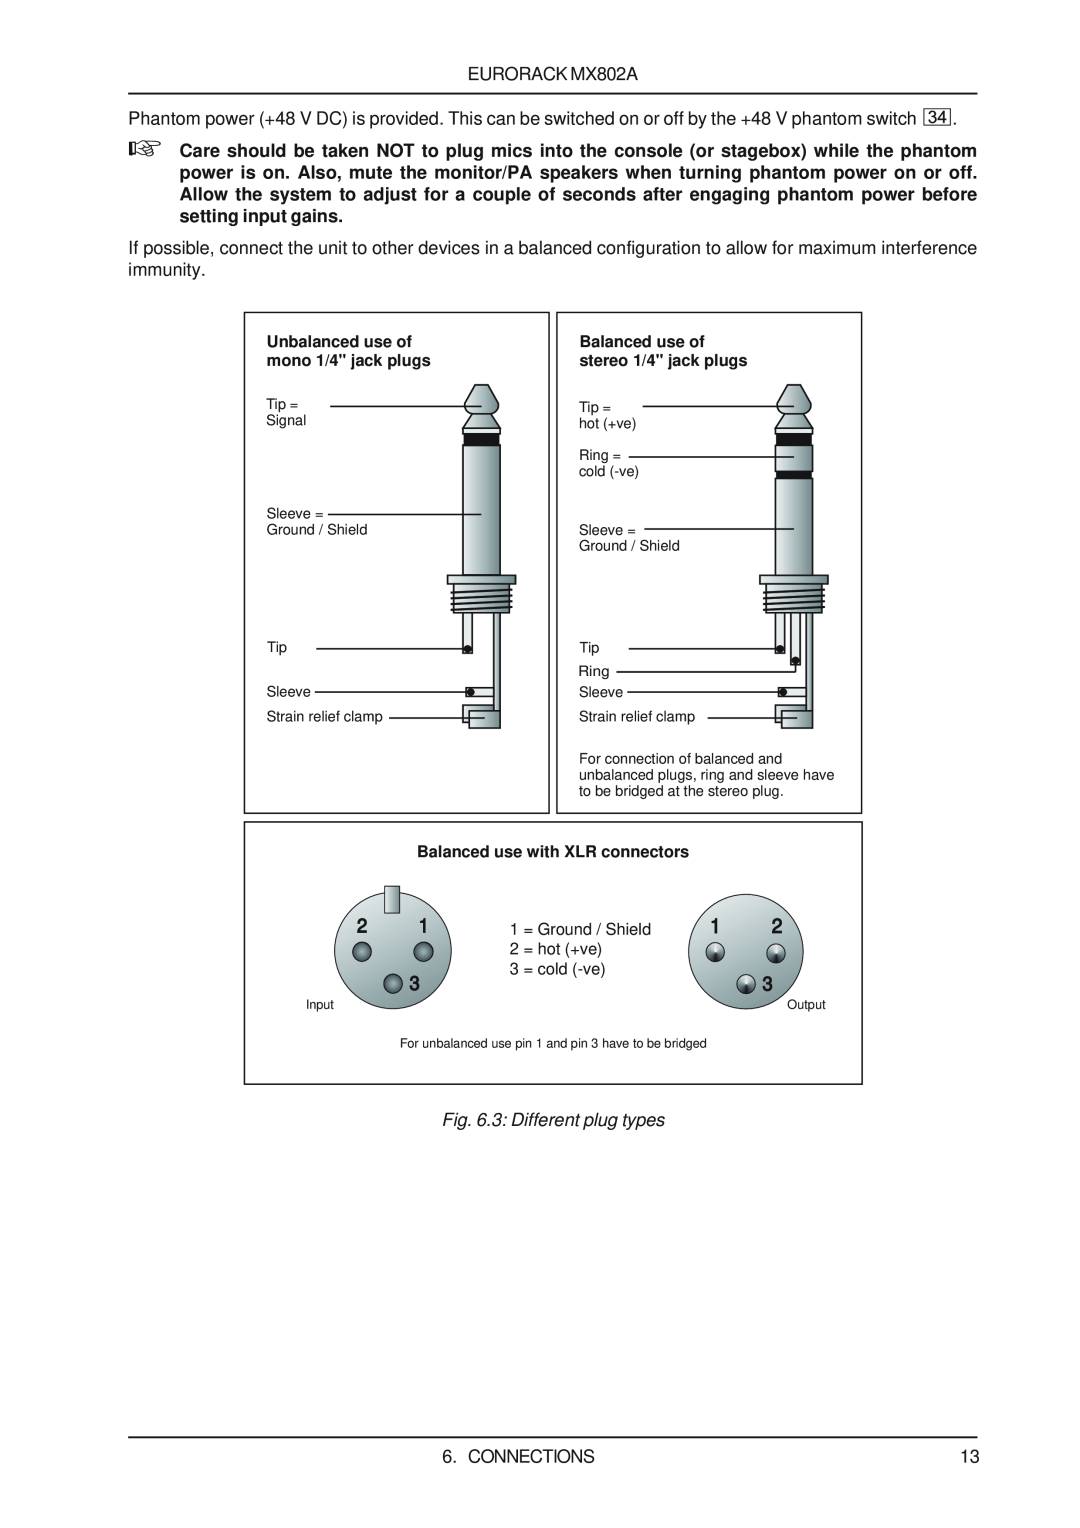 Behringer MX802A 3 Different plug types, Unbalanced use of mono 1/4 jack plugs, Balanced use of stereo 1/4 jack plugs 